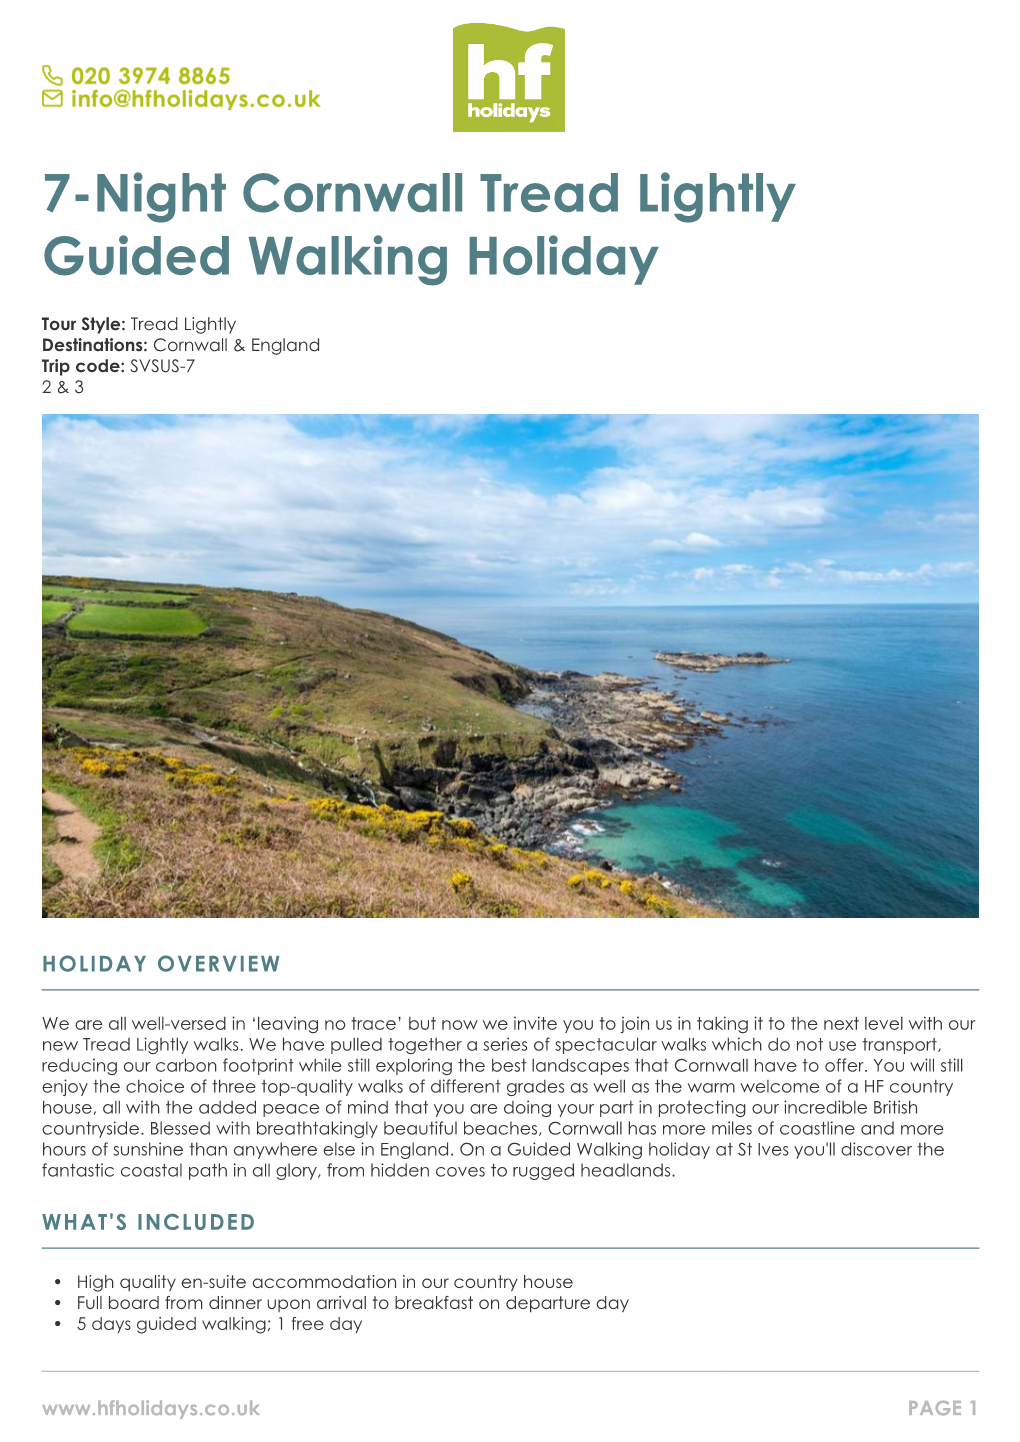 7-Night Cornwall Tread Lightly Guided Walking Holiday